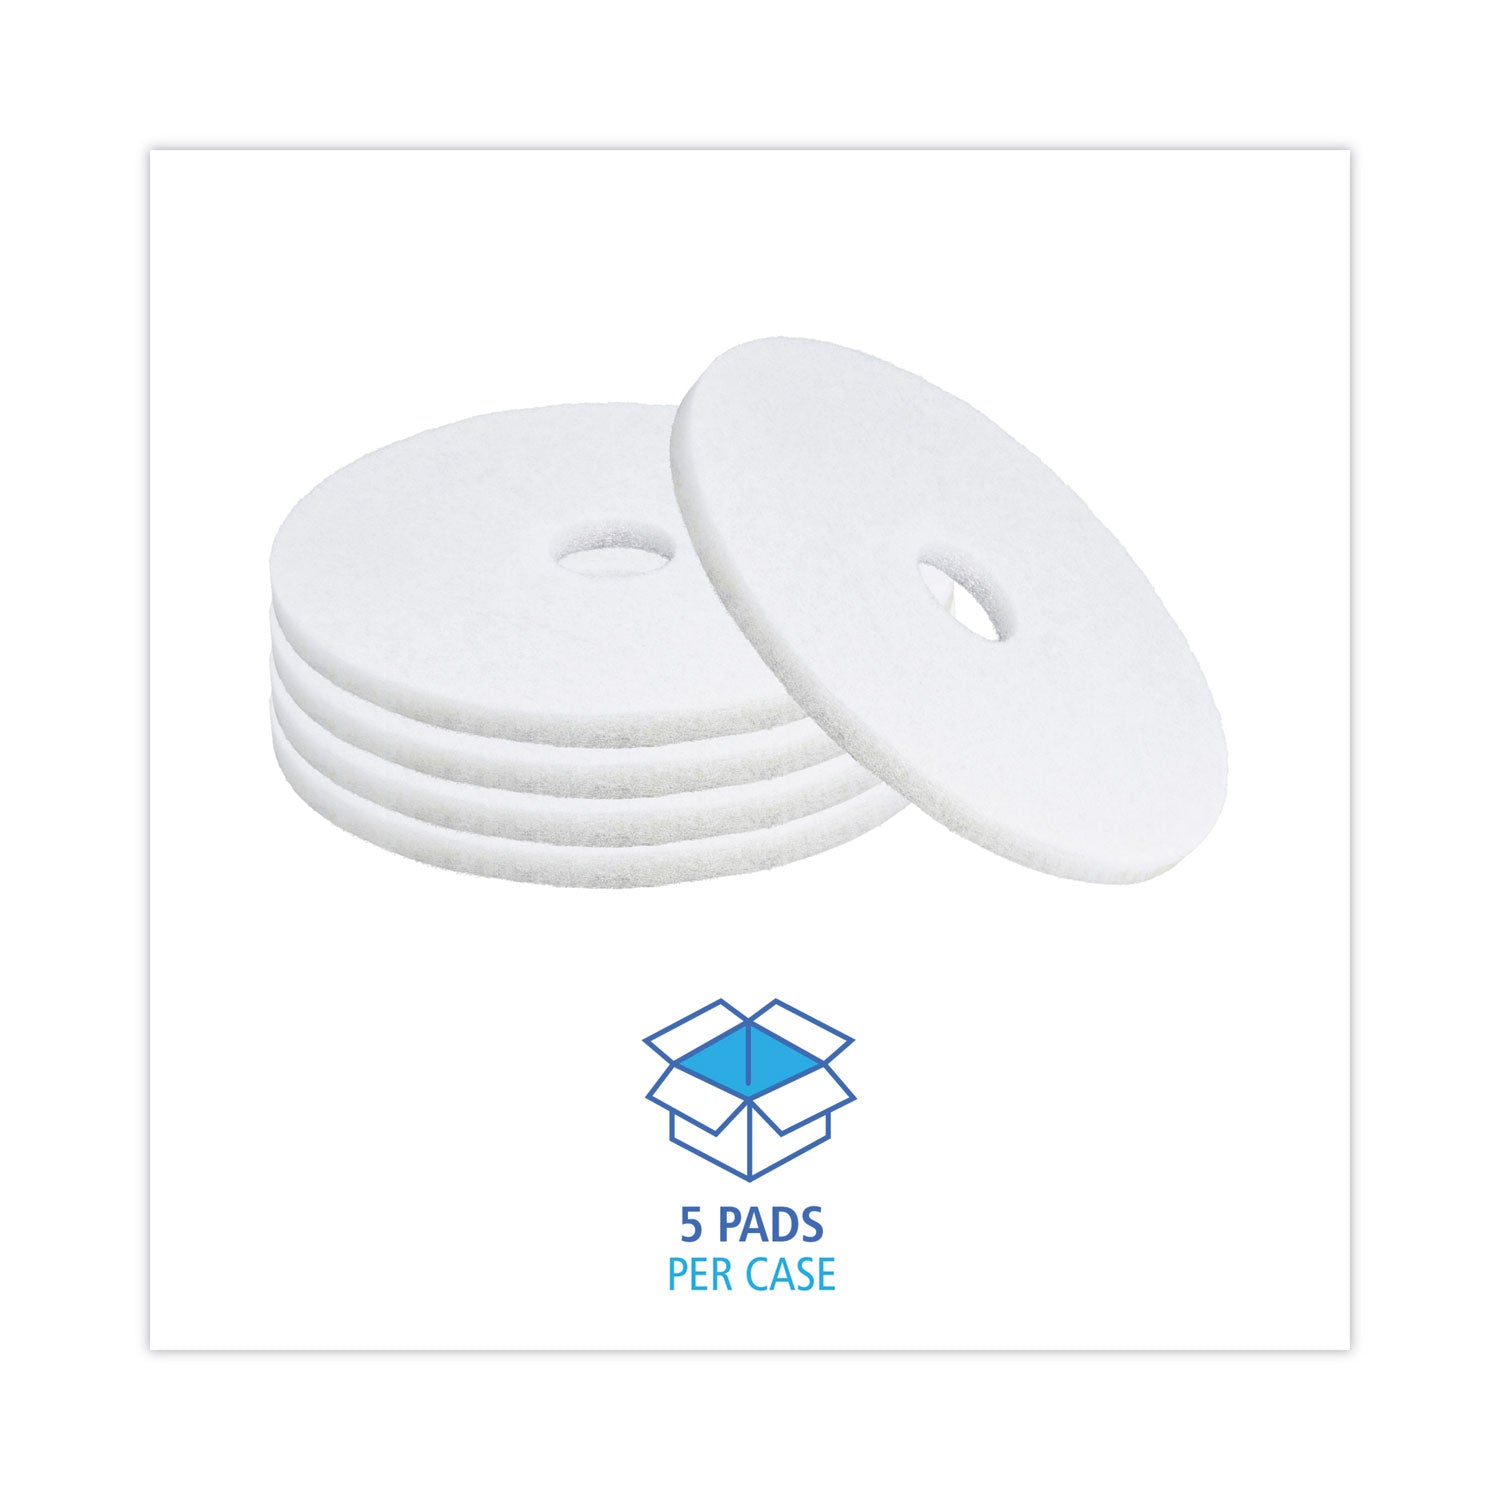 Polishing Floor Pads, 17" Diameter, White, 5/Carton - 